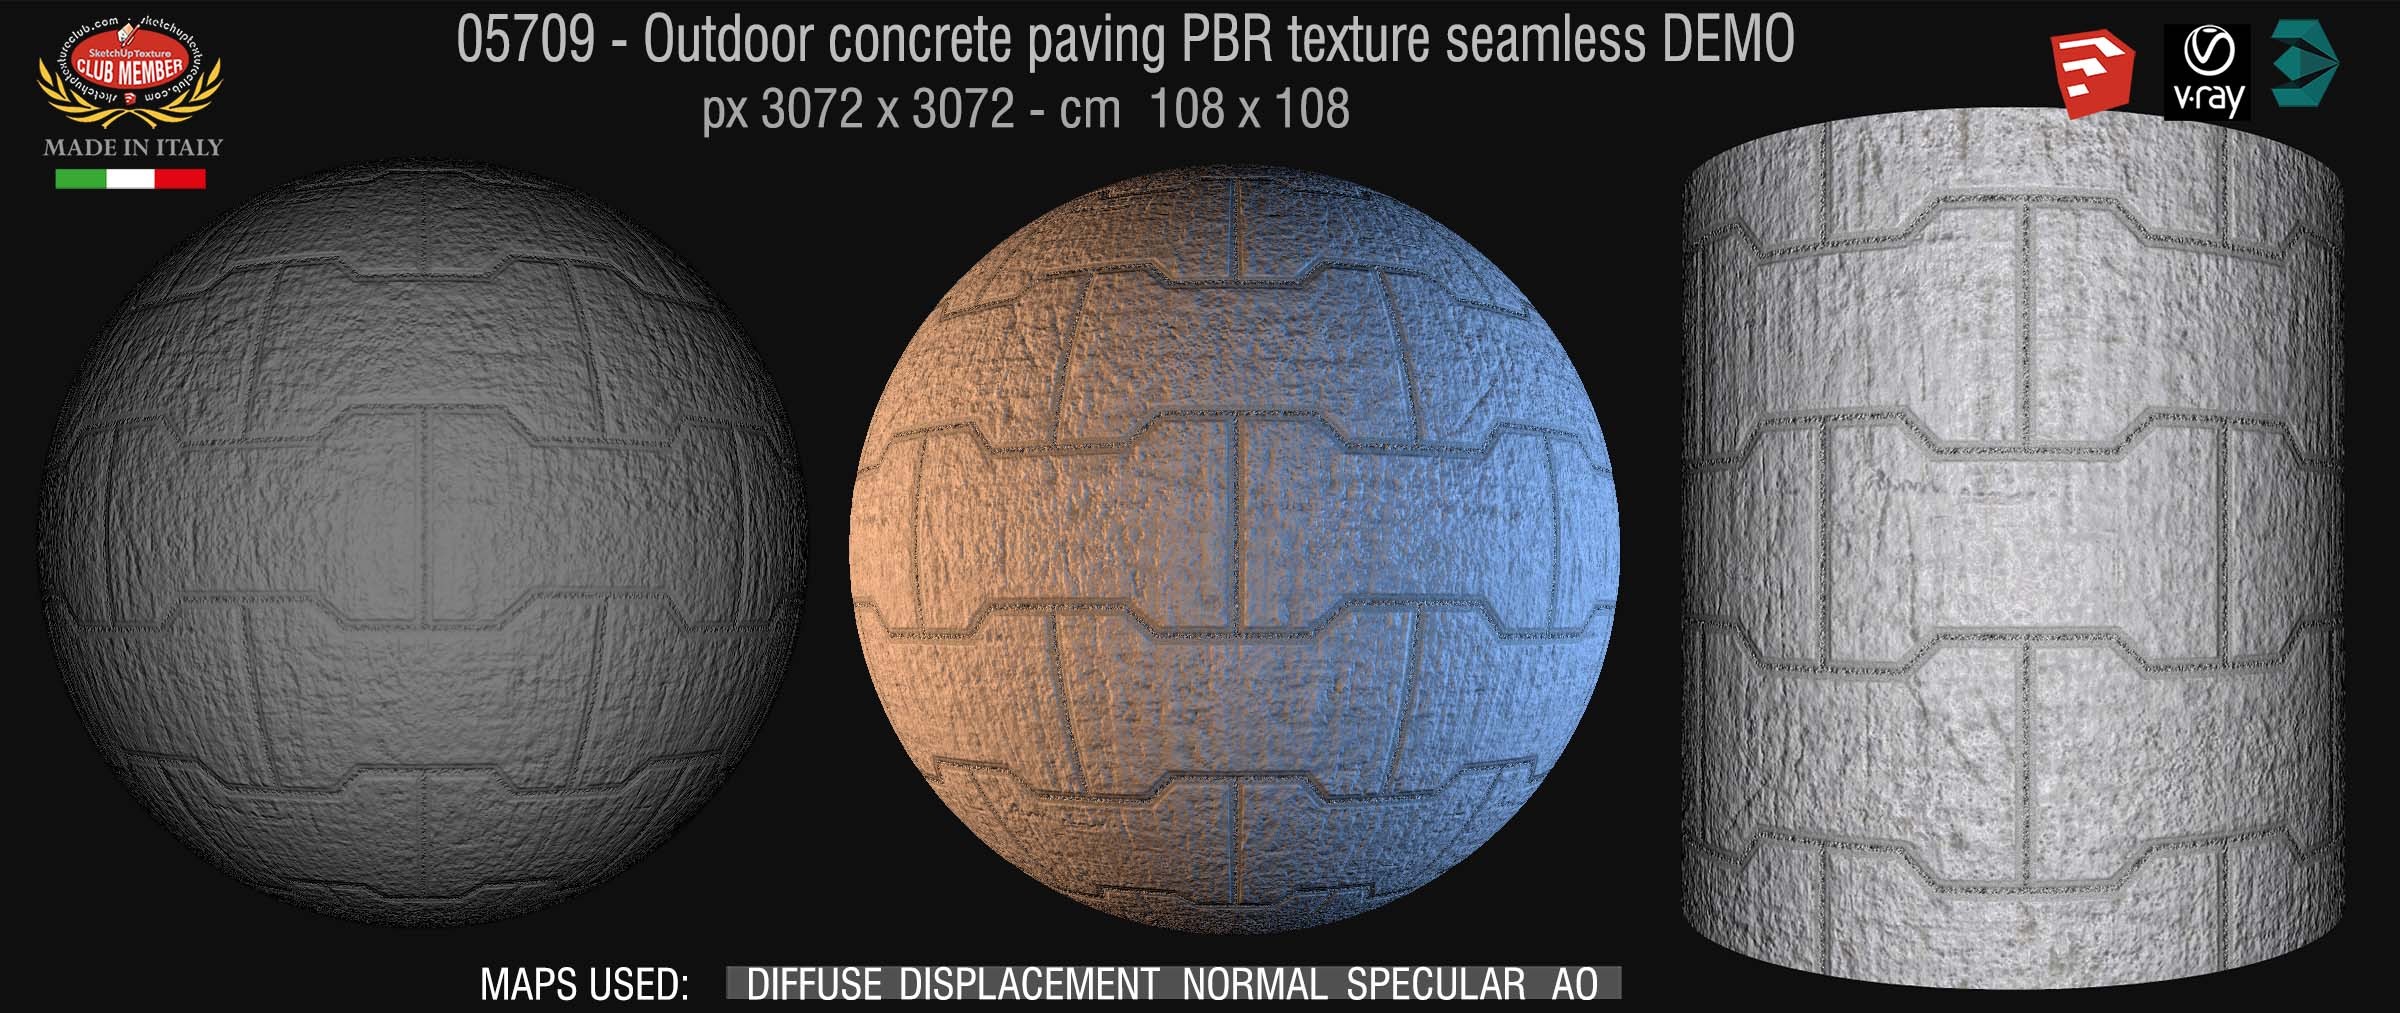 05709 Outdoor concrete Paving PBR texture seamless DEMO